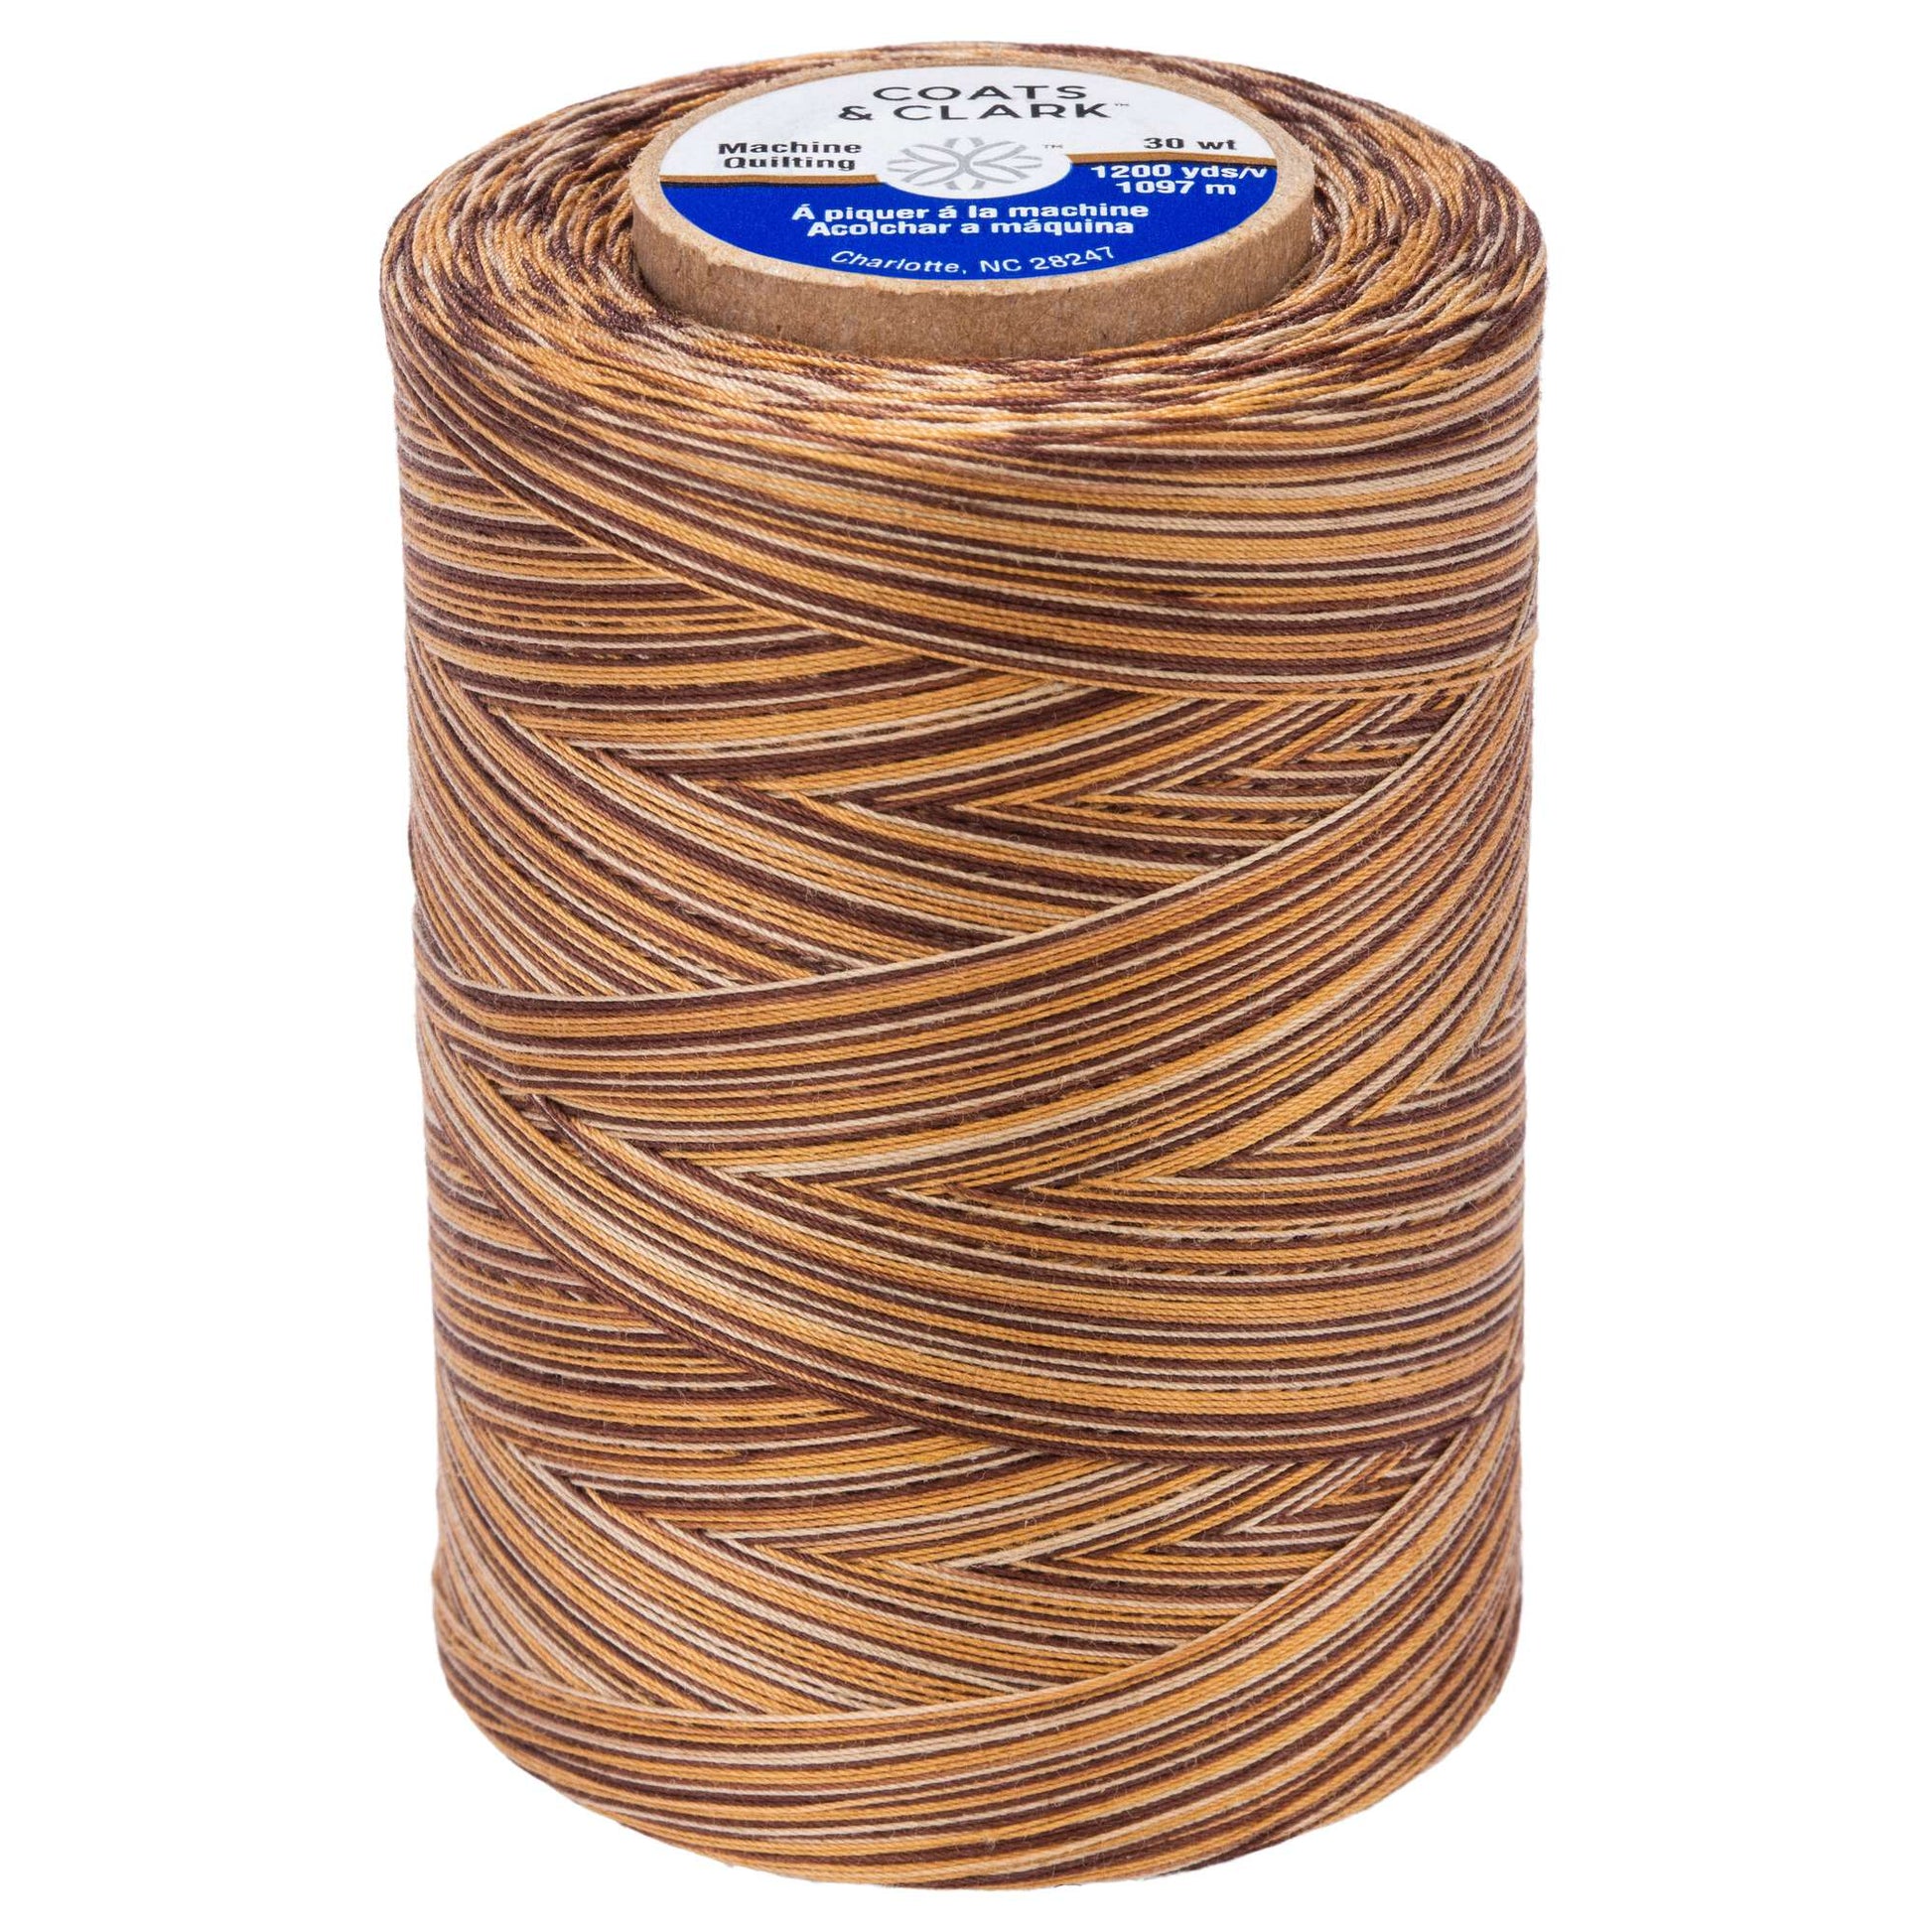 Coats & Clark Cotton Machine Quilting Multicolor Thread (1200 Yards) Chocolate Swirl